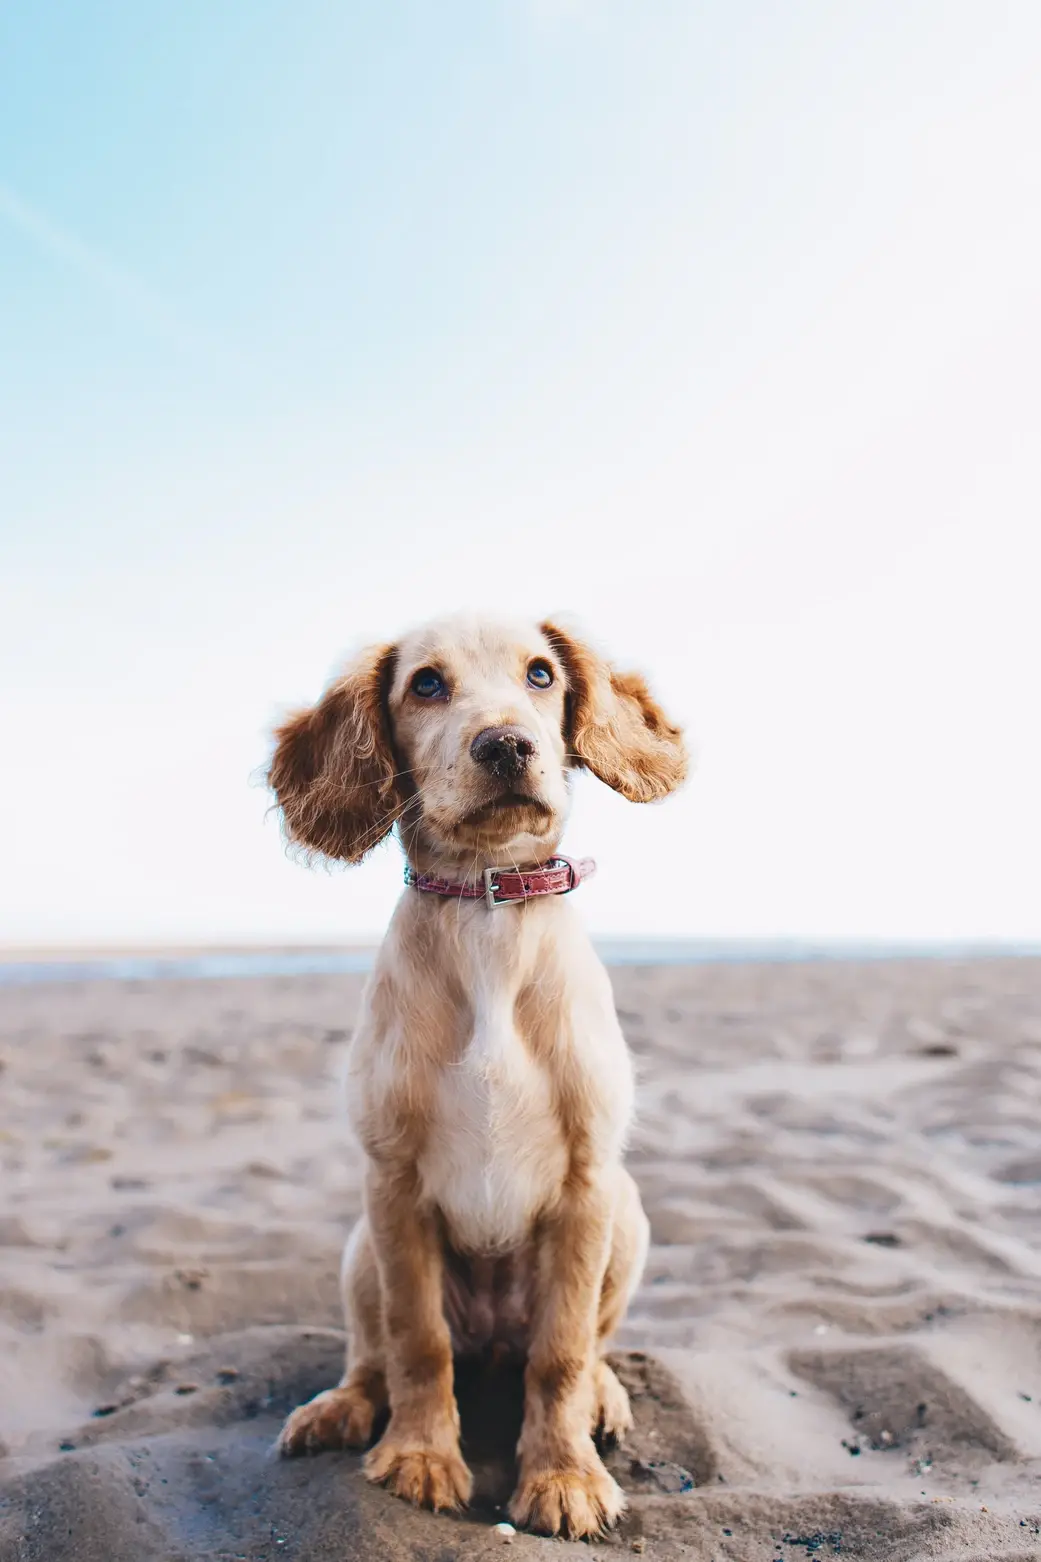 Brown dog sitting on sandy beach